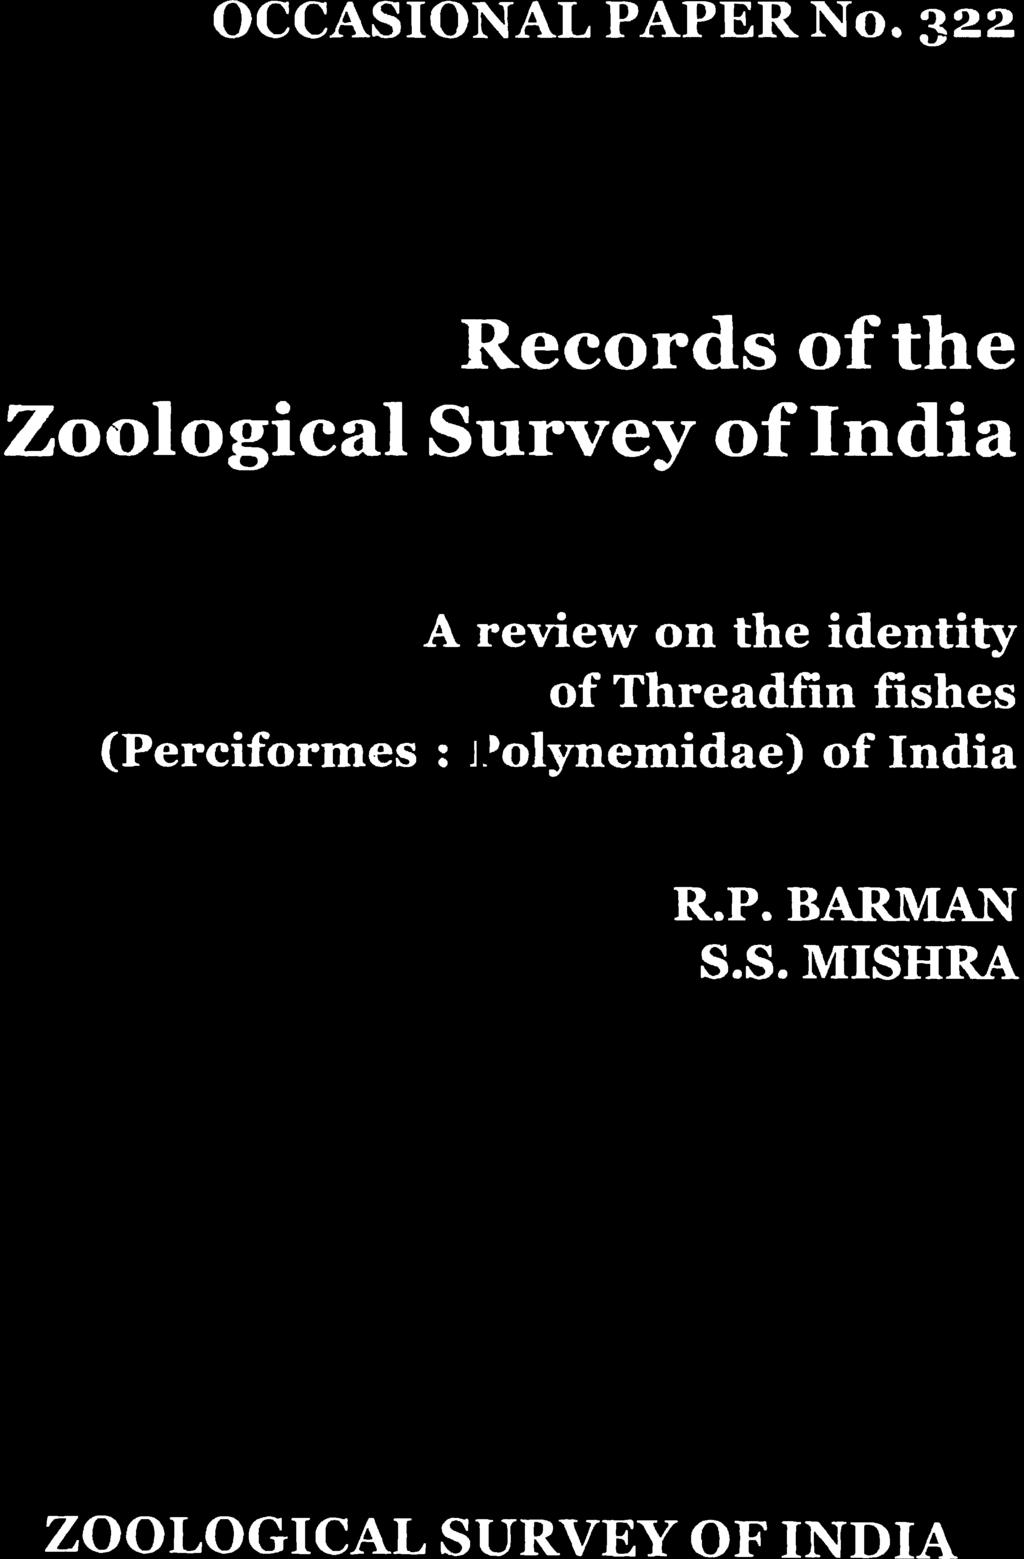 India R.P.BARMAN S.